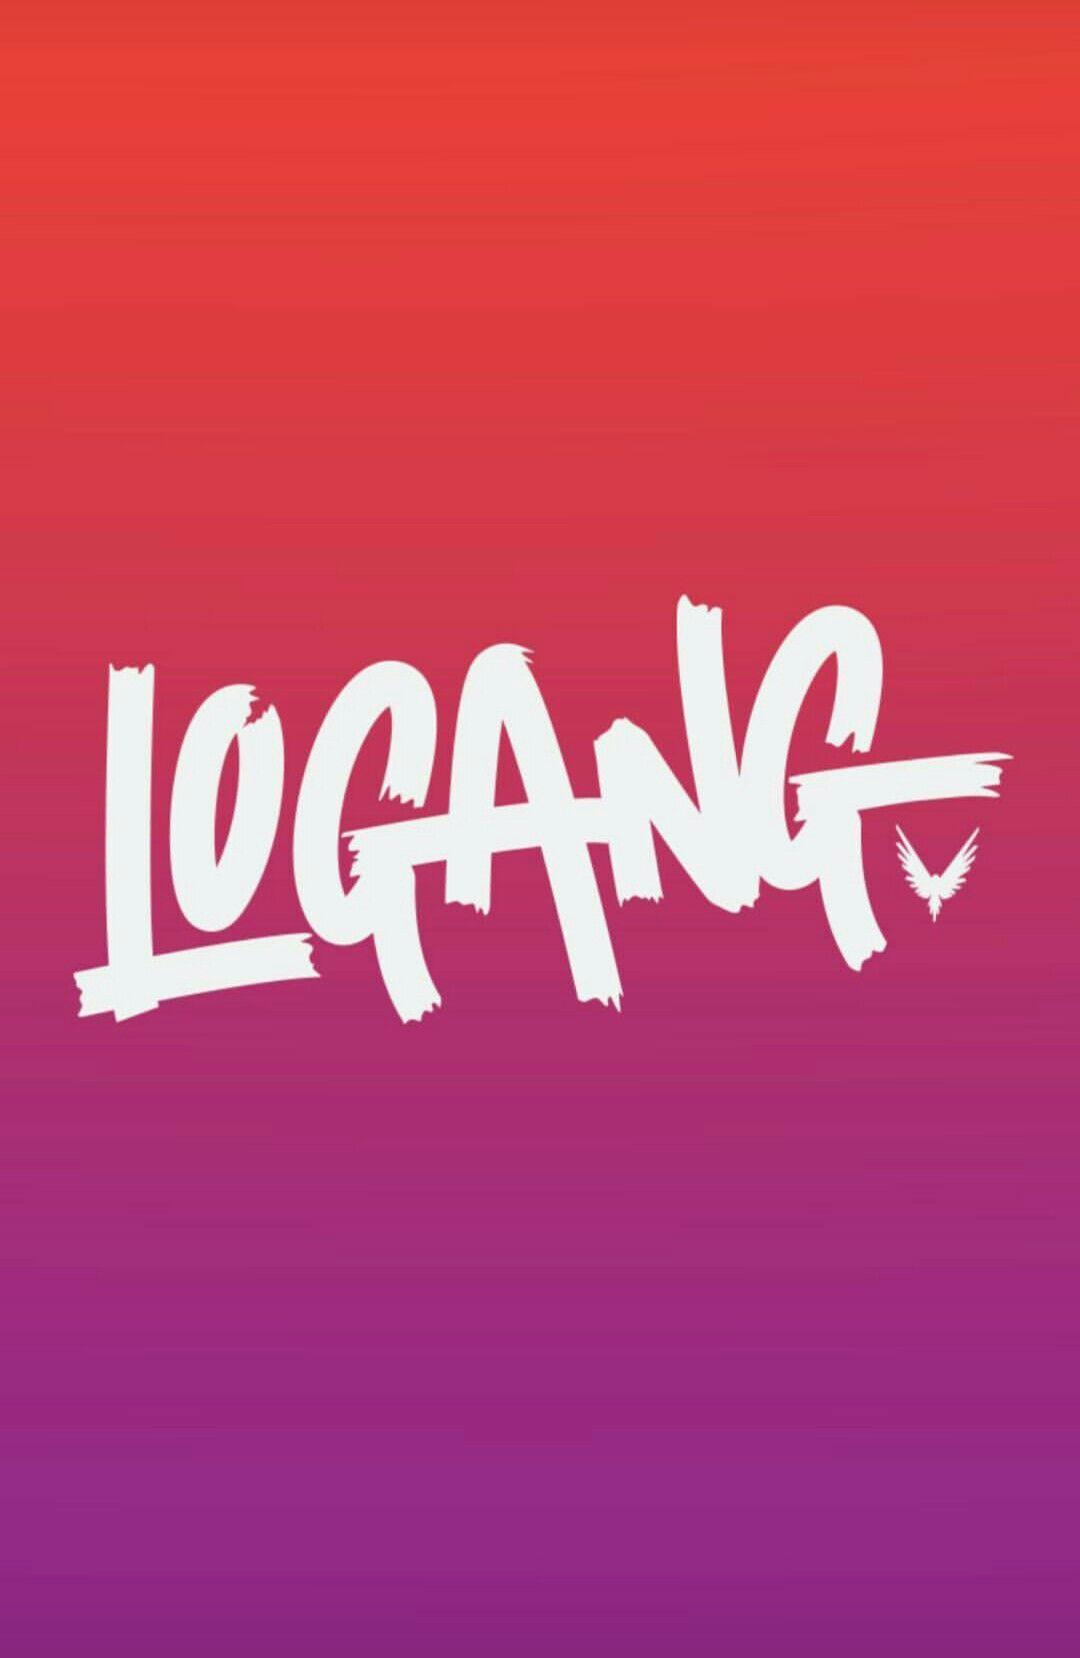 Logang or team 10